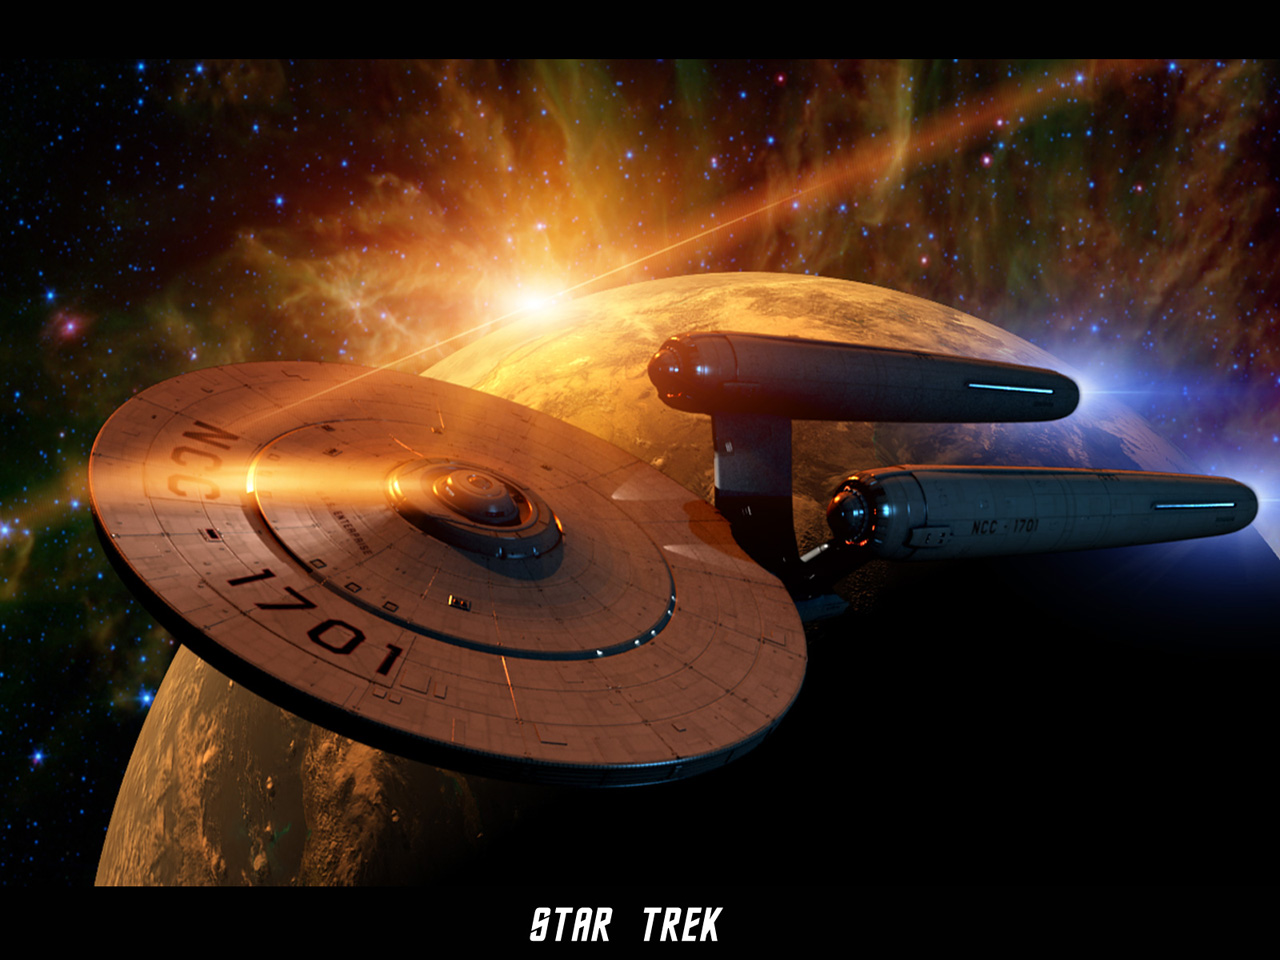 - Star Trek Enterprise NCC 1701 On Space Sunset - free Star Trek computer desktop wallpaper, pictures, images.